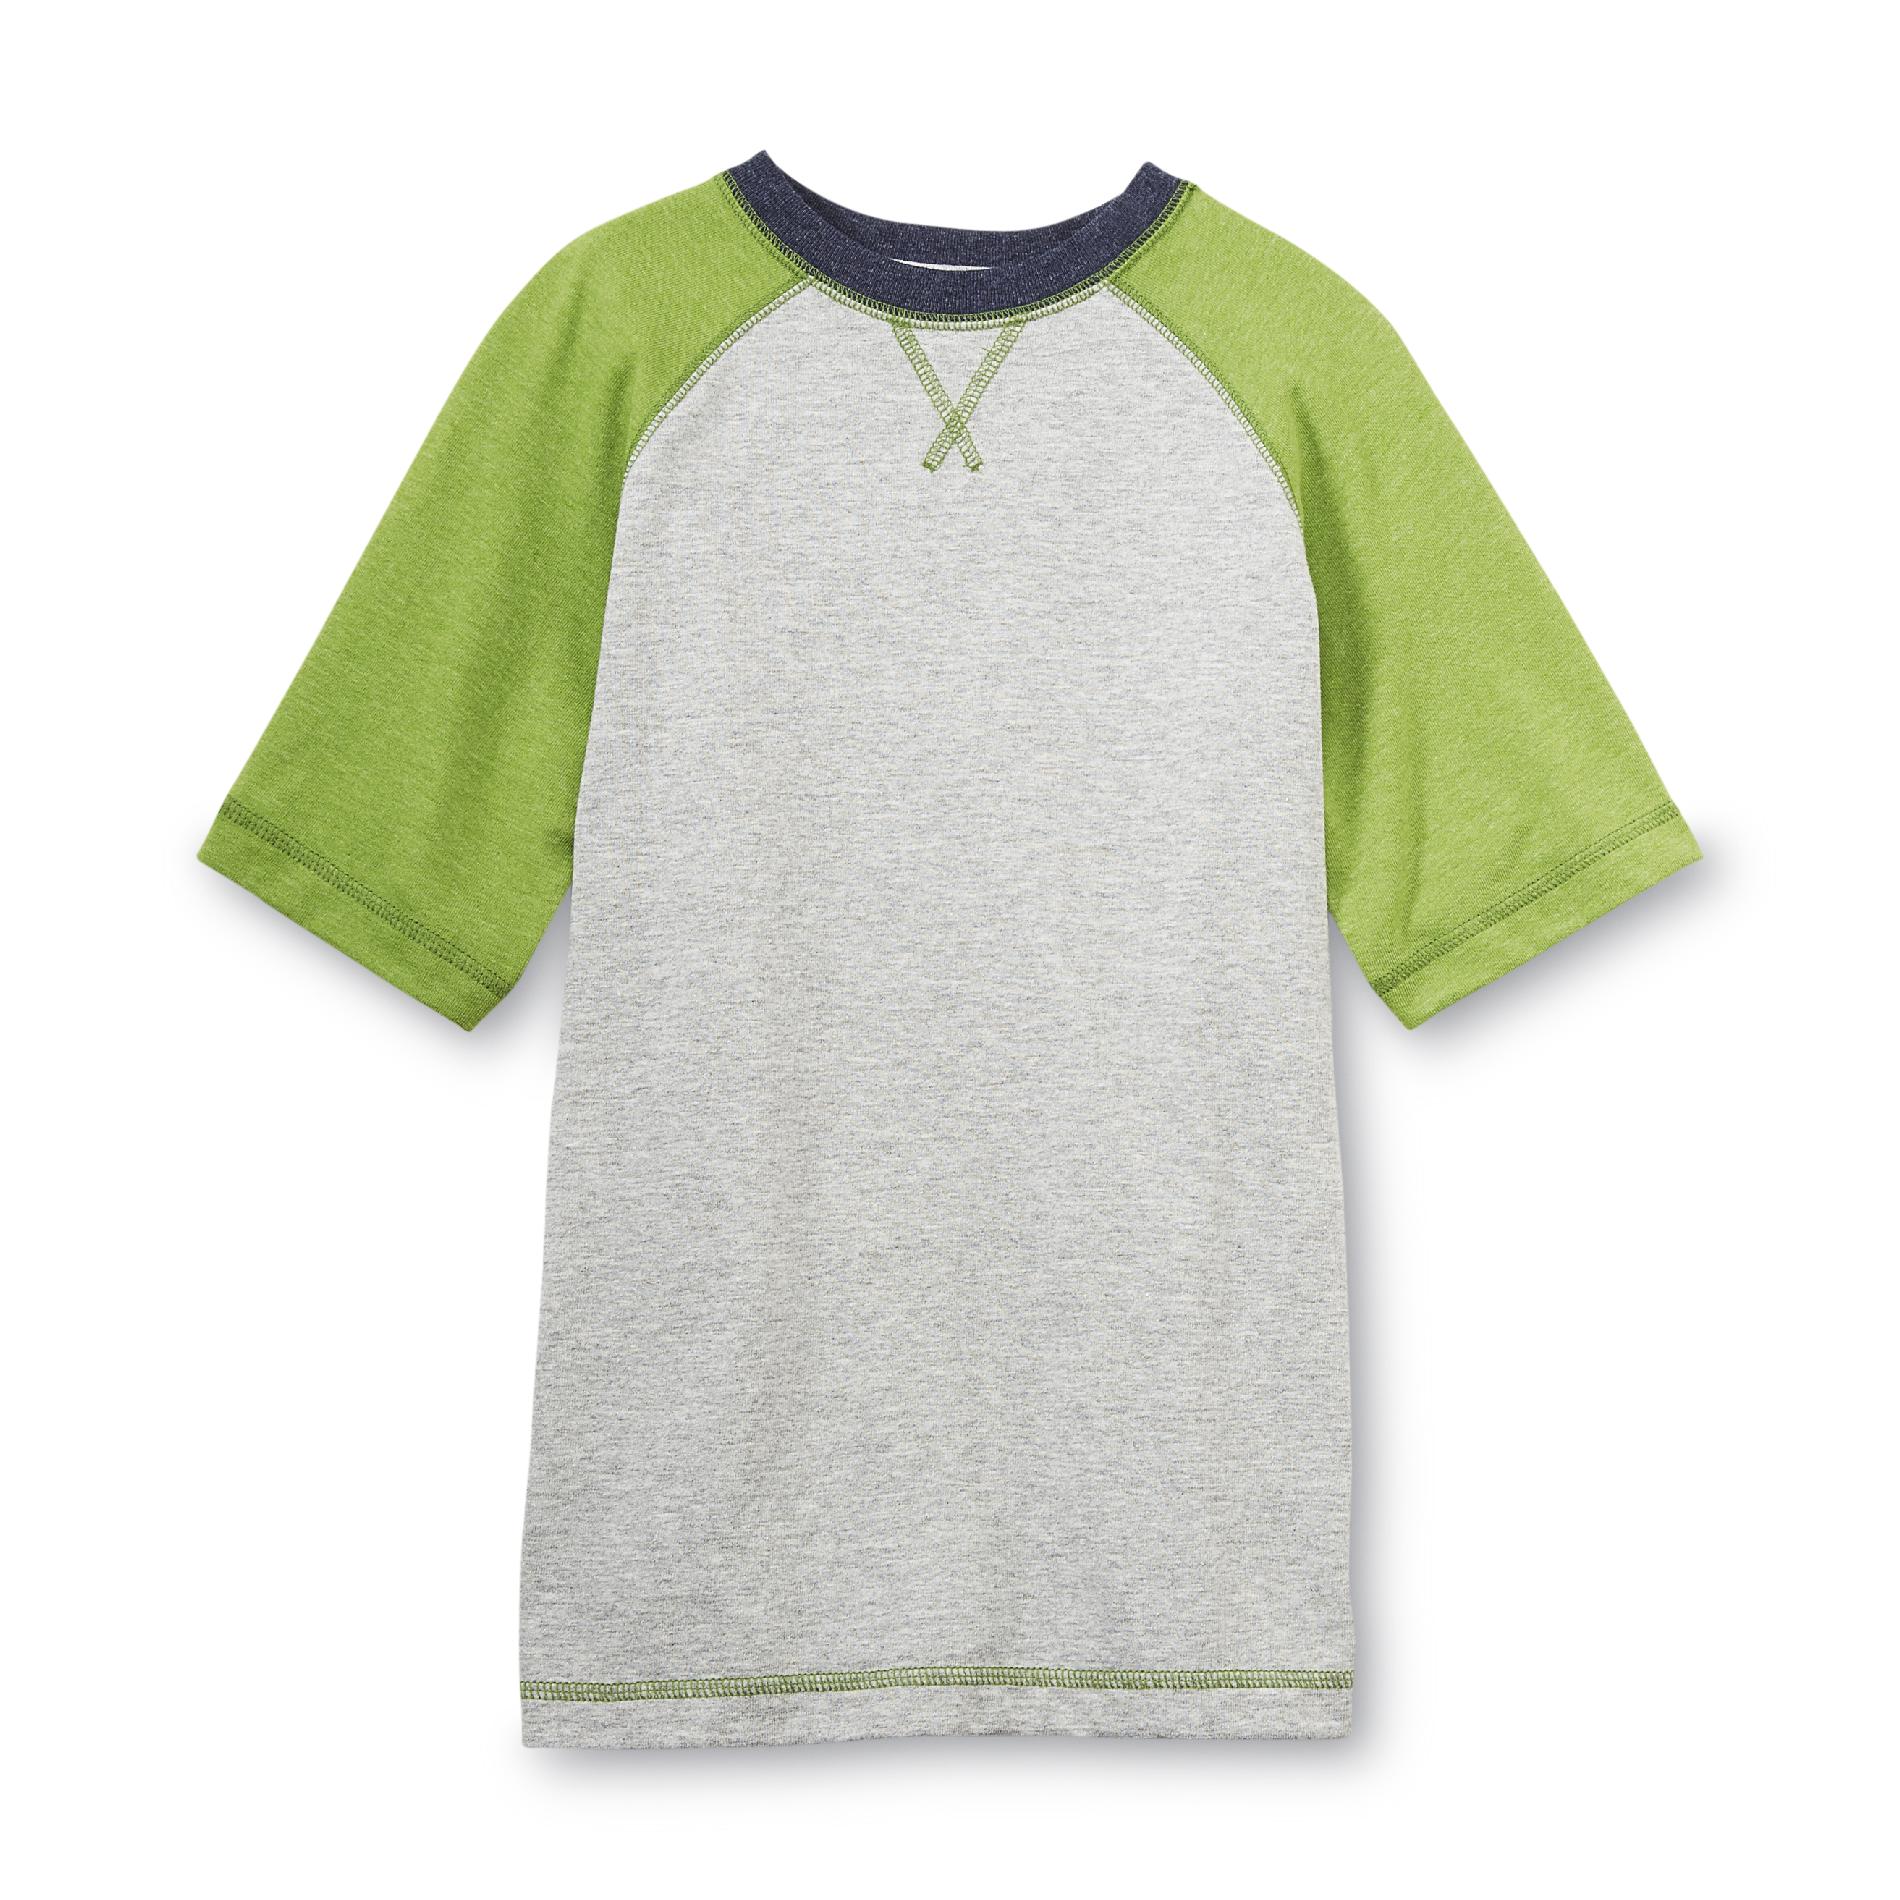 Basic Editions Boy's Raglan T-Shirt - Colorblock